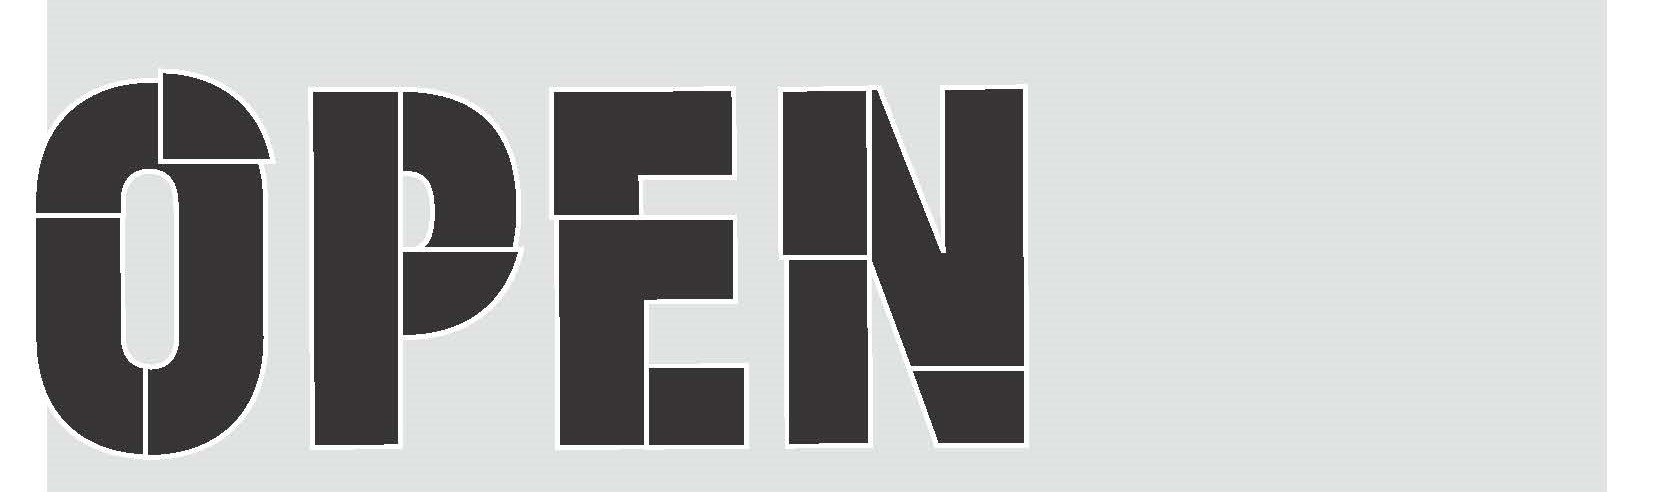 Bild des Logo "Open"